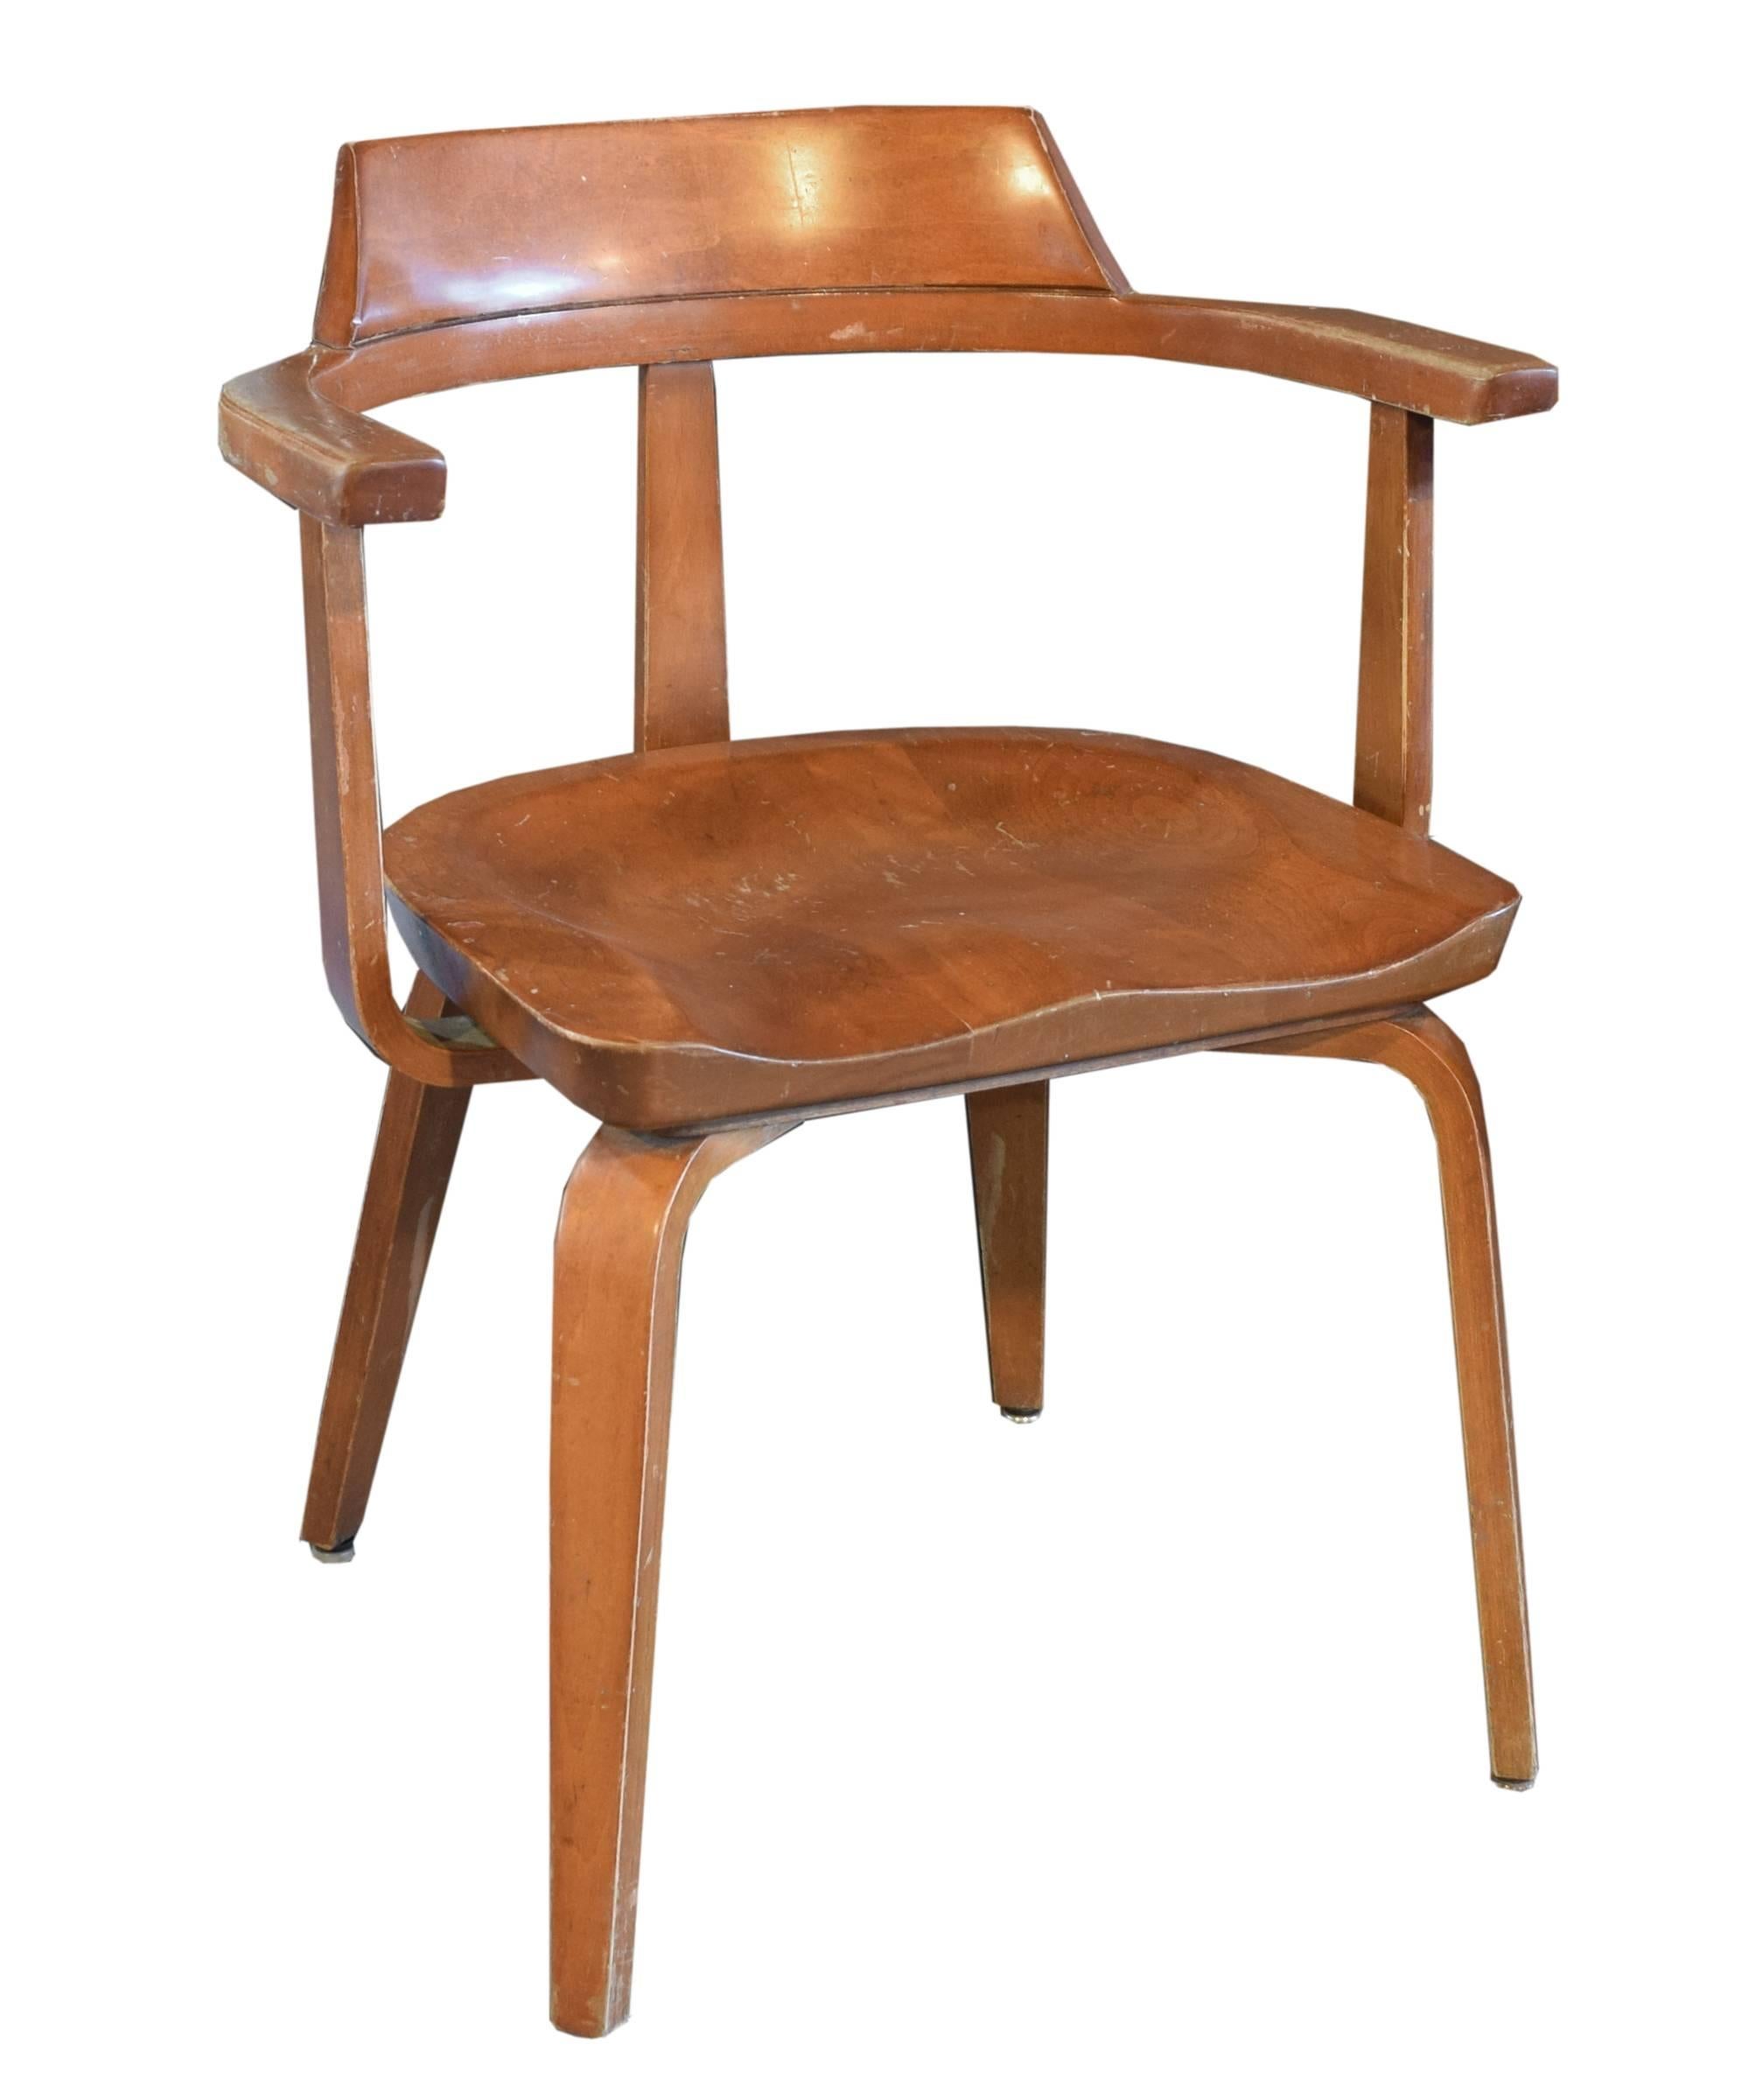 walter gropius chair